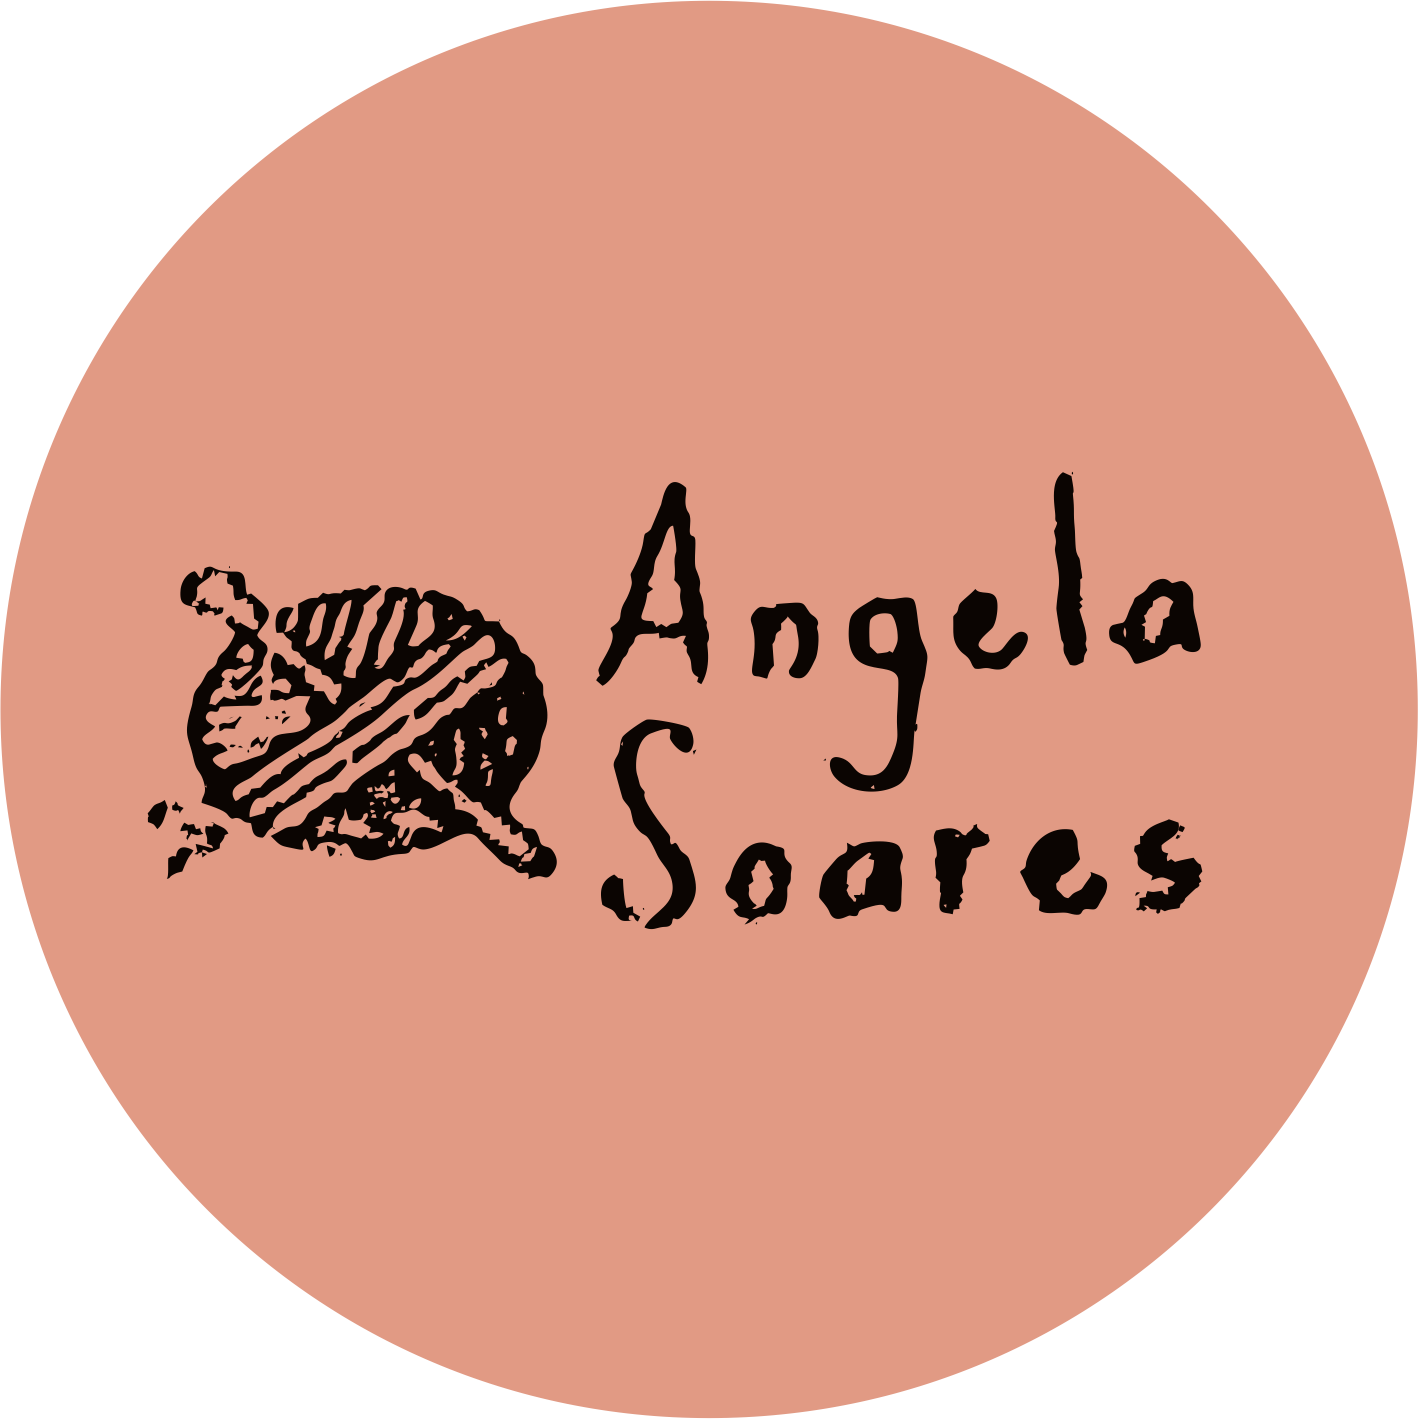 Angela Soares